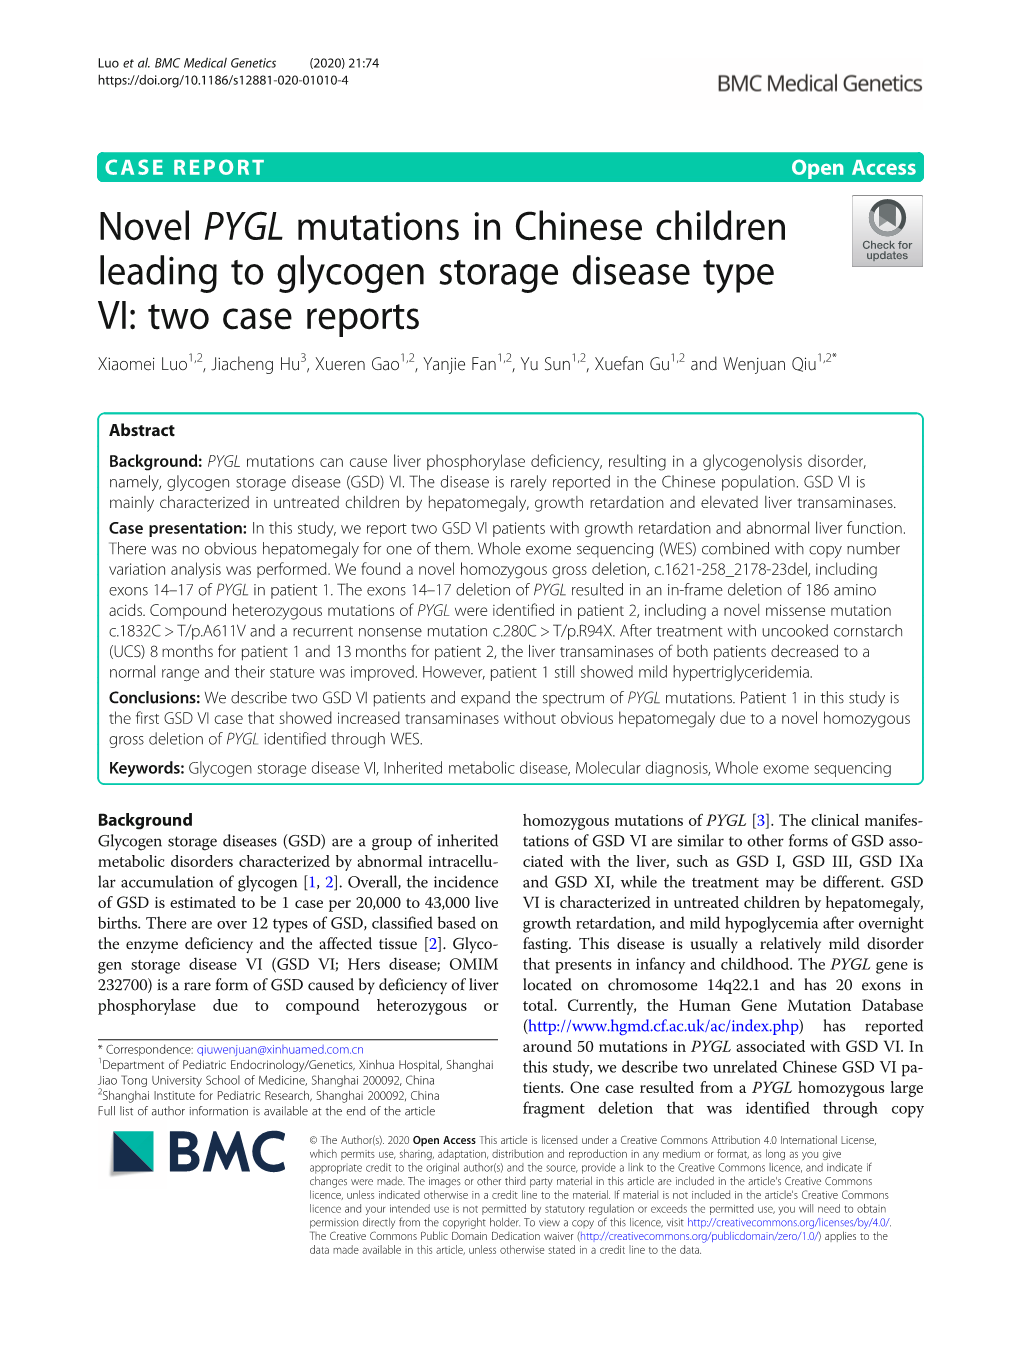 Novel PYGL Mutations in Chinese Children Leading to Glycogen